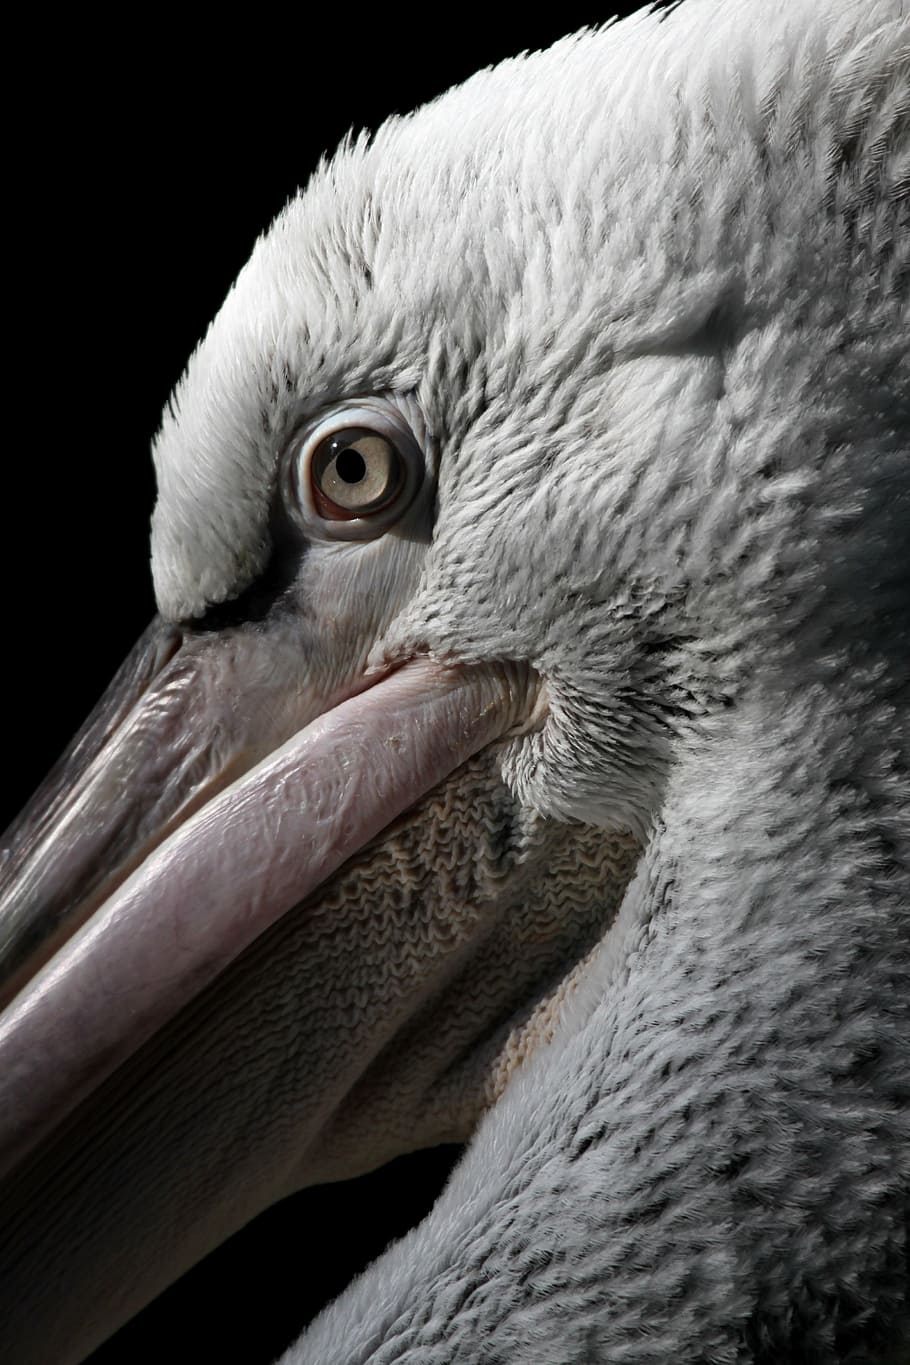 dalmatian pelican, blijdorp, diegaarde, zoo, rotterdam, animal, vertebrate, animal themes, one animal, close-up